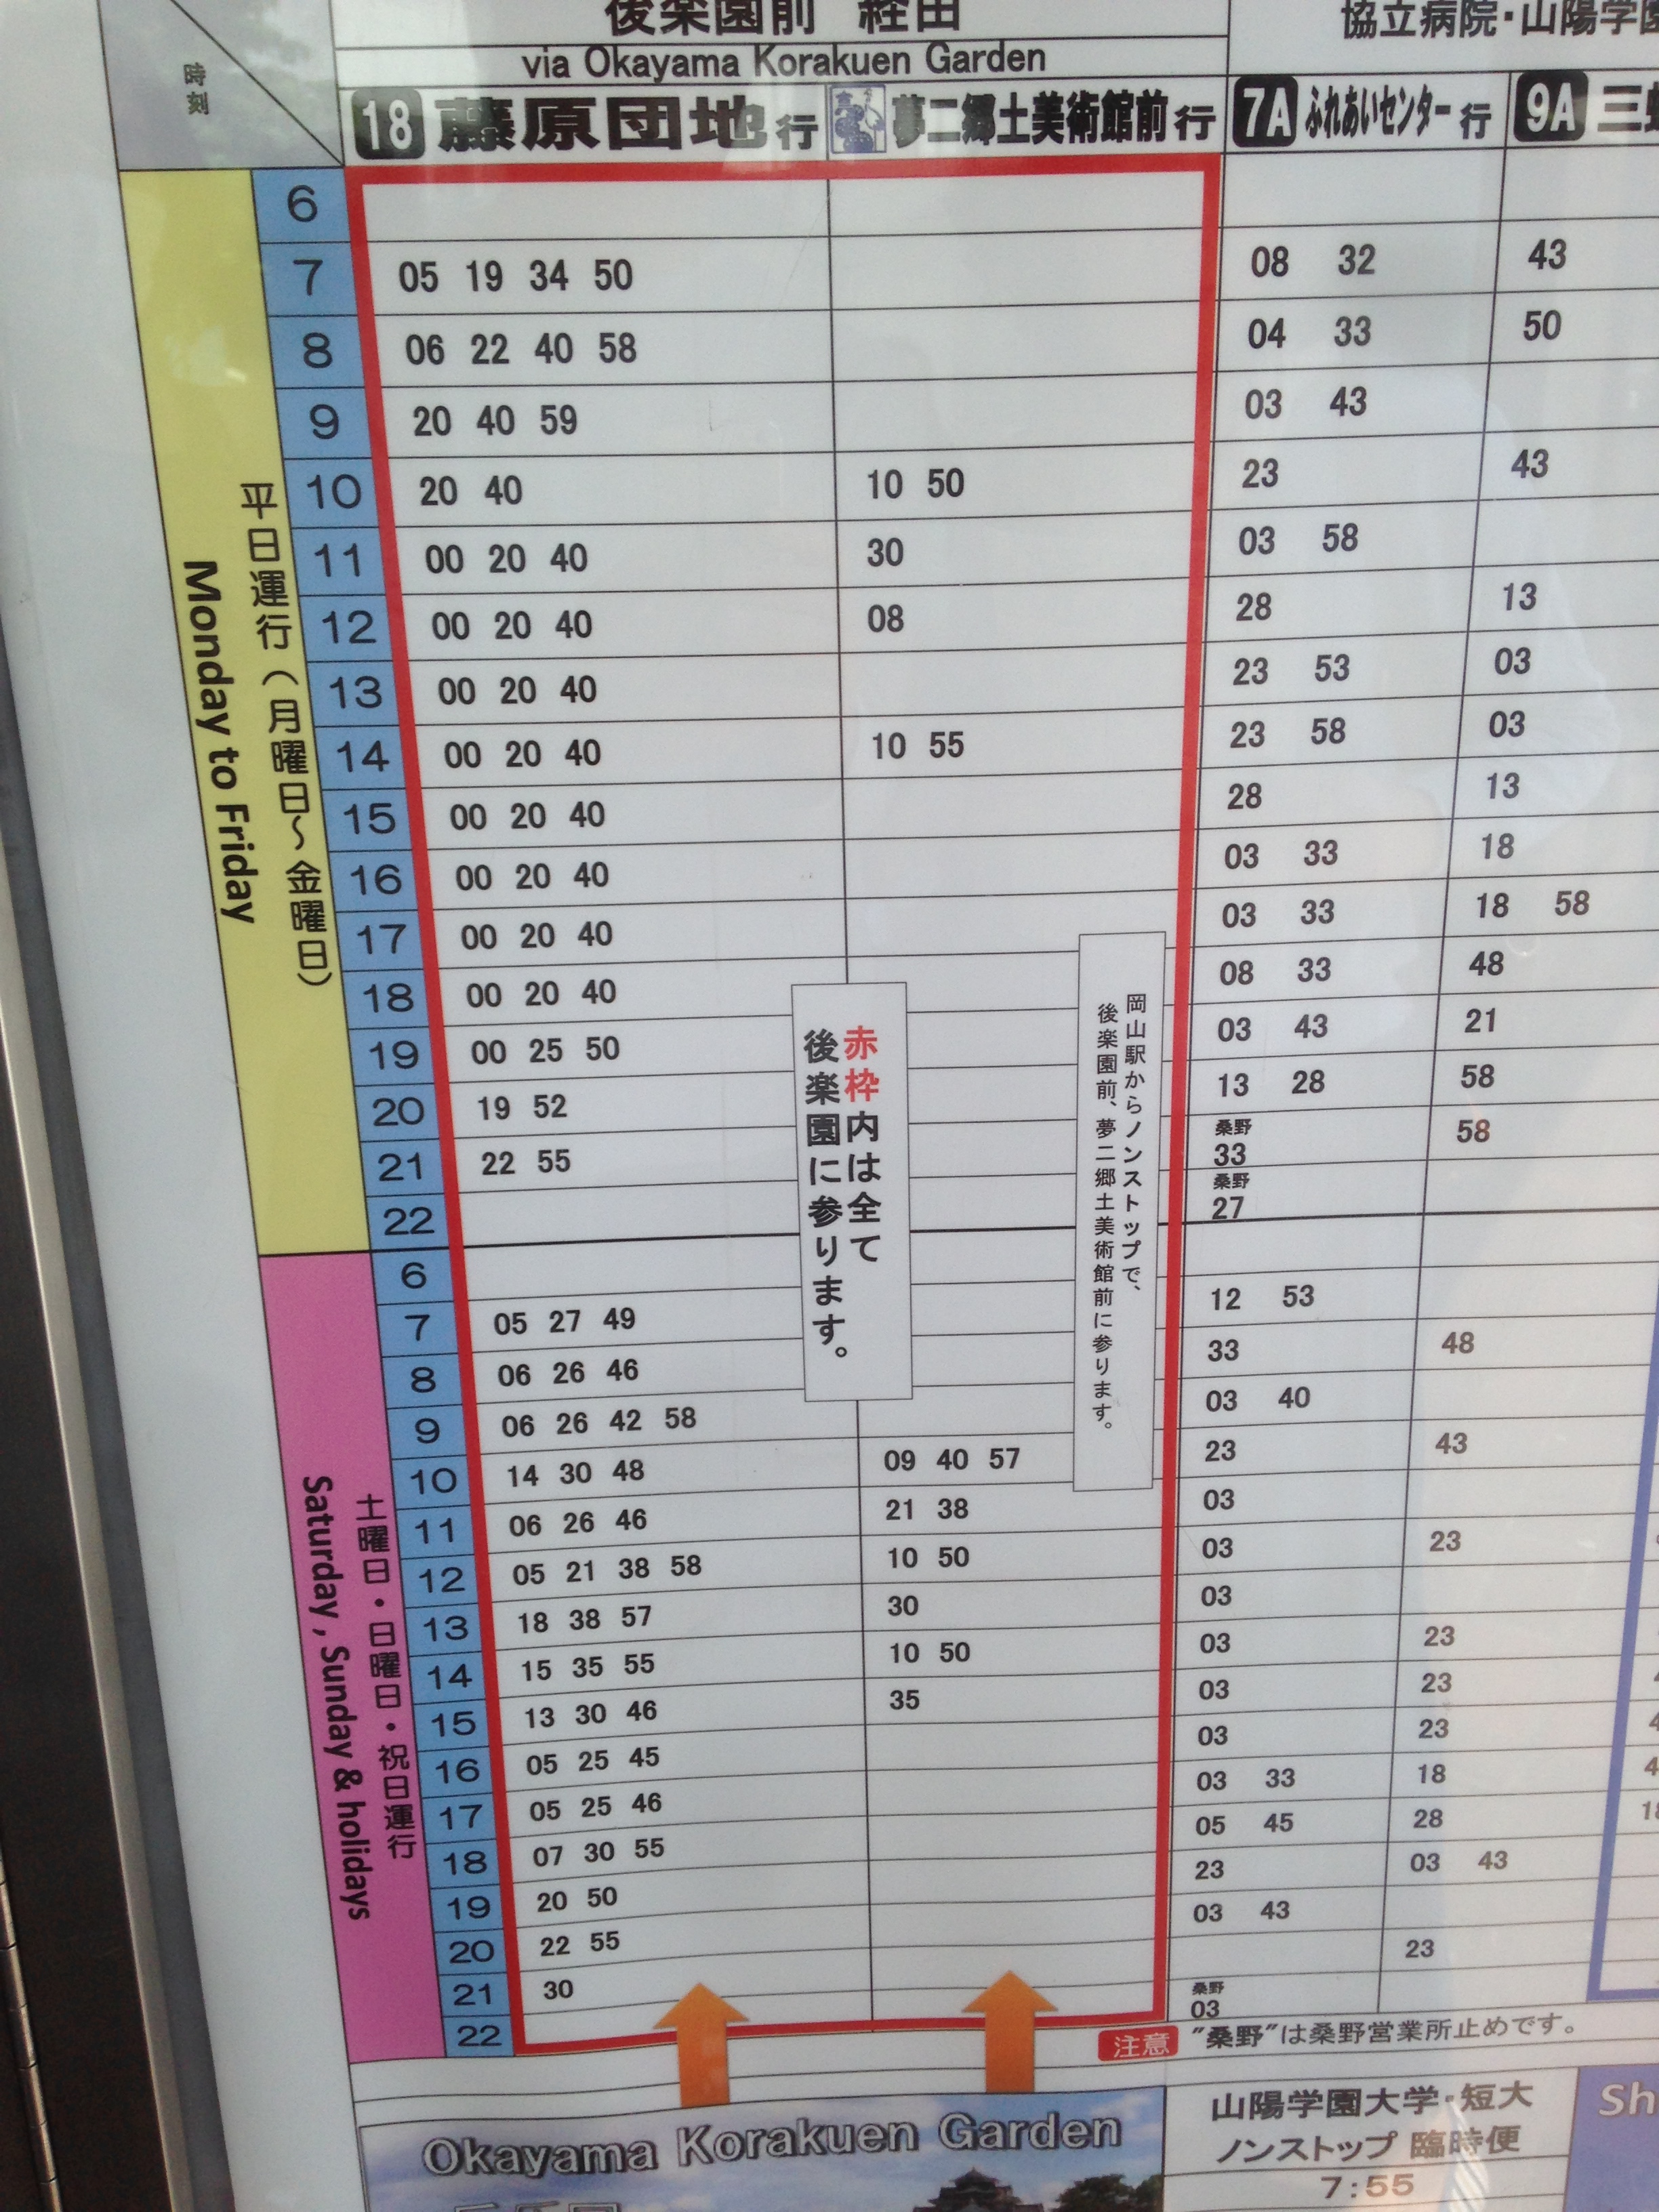 通常の岡山駅ー後楽園バス時刻表